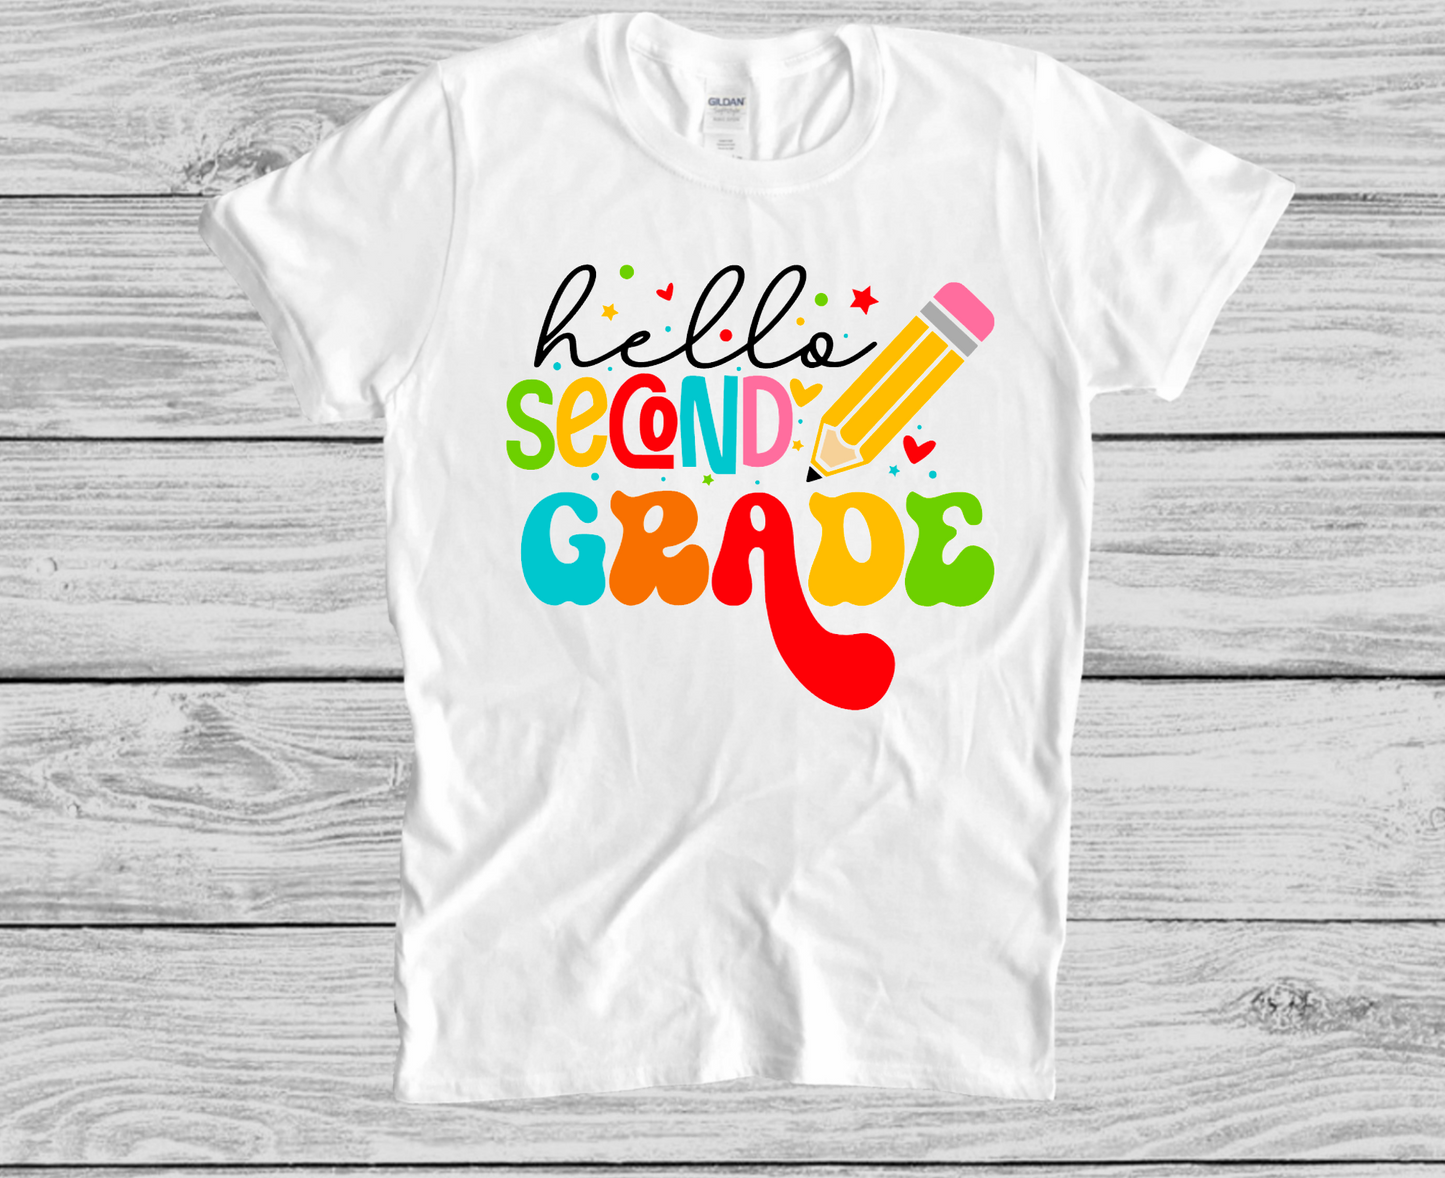 Hello Pre-K, Kindergarten, First Second Third Fourth Fifth Grade! || Printed Shirt